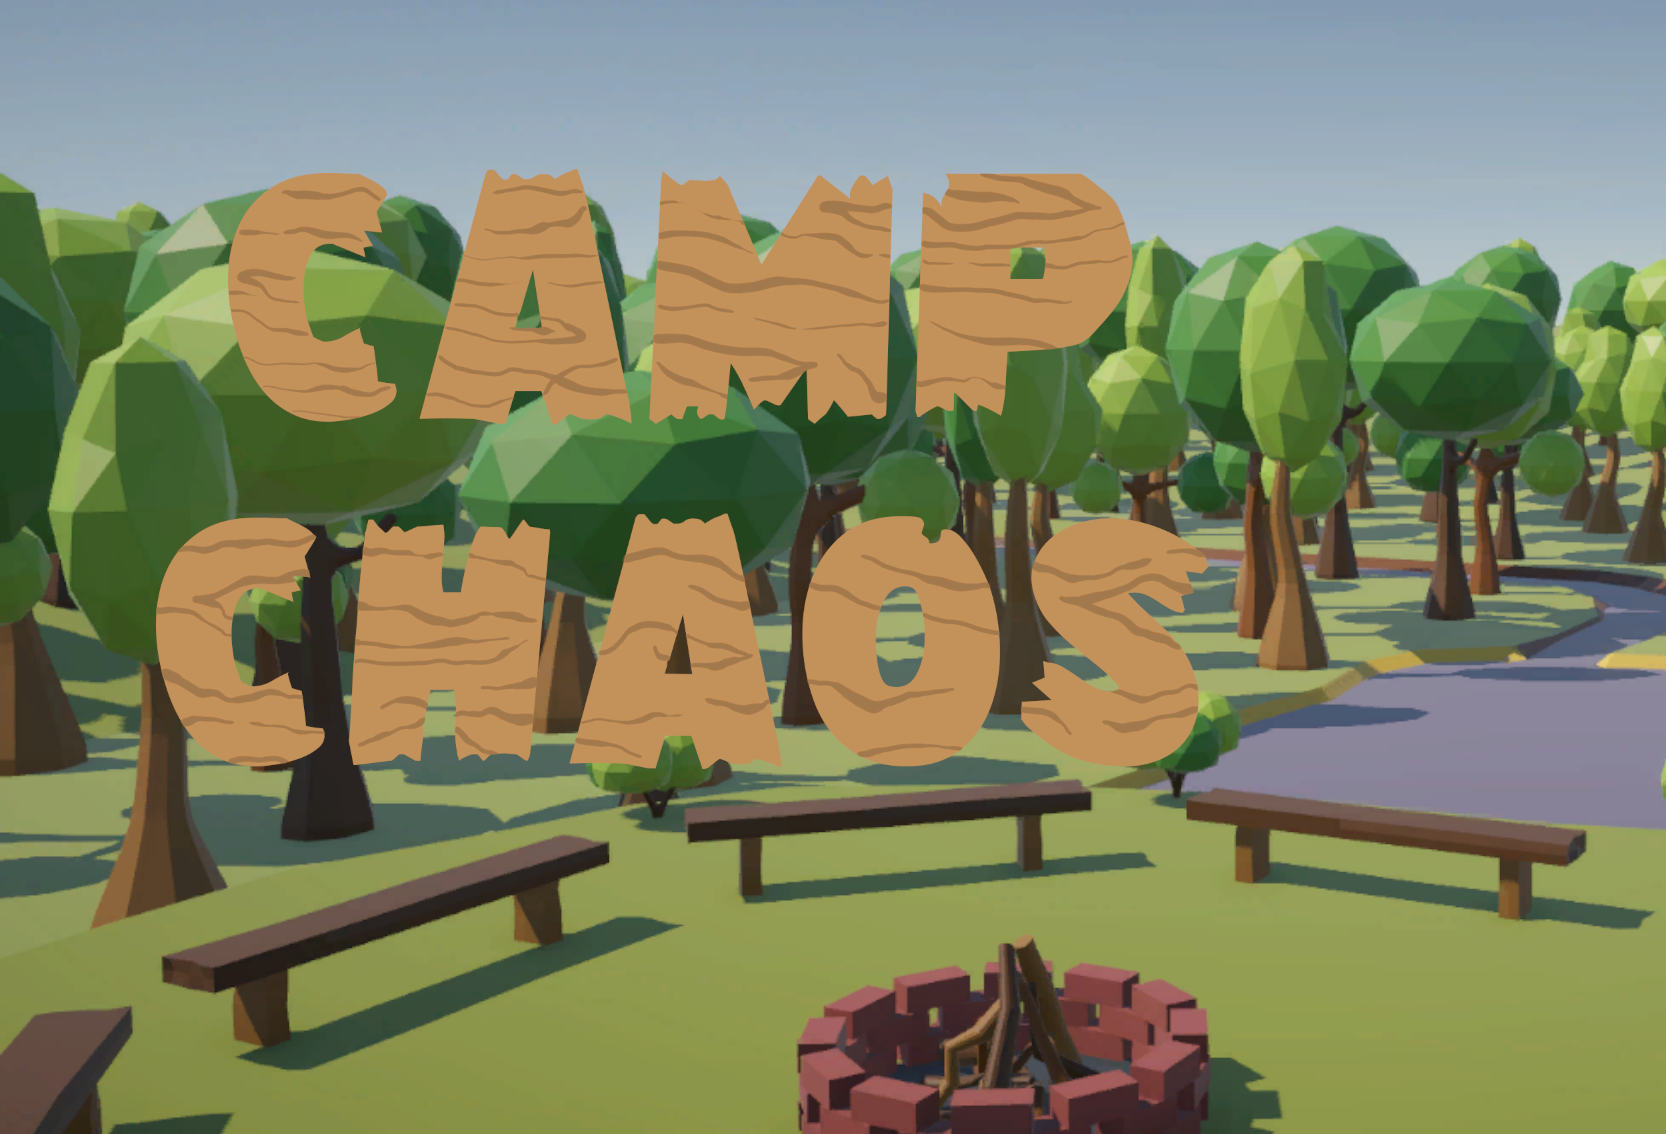 Camp Chaos